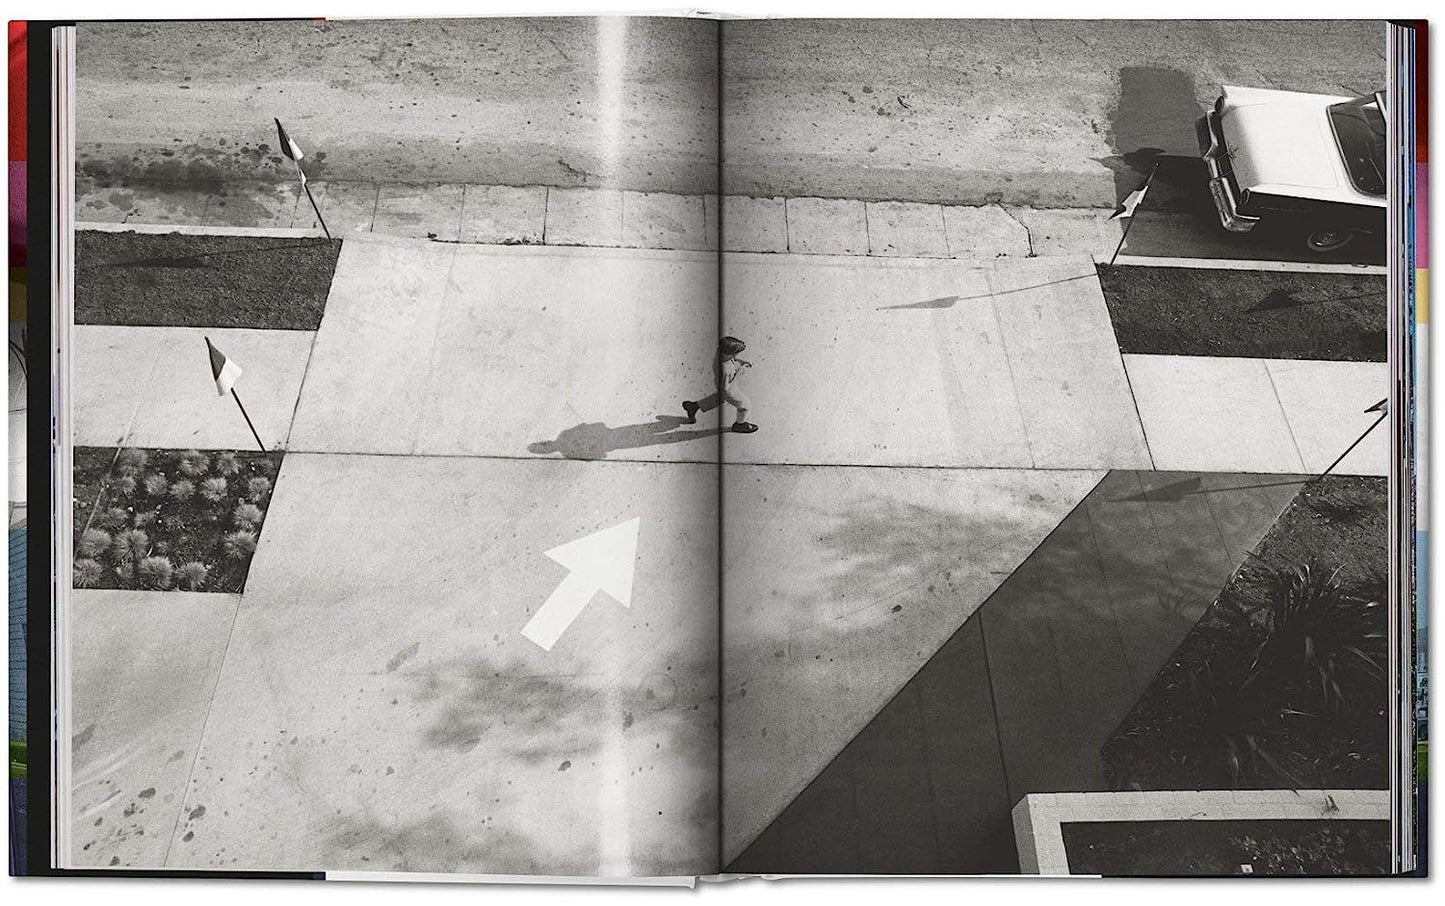 Dennis Hopper. Photographs 1961-1967